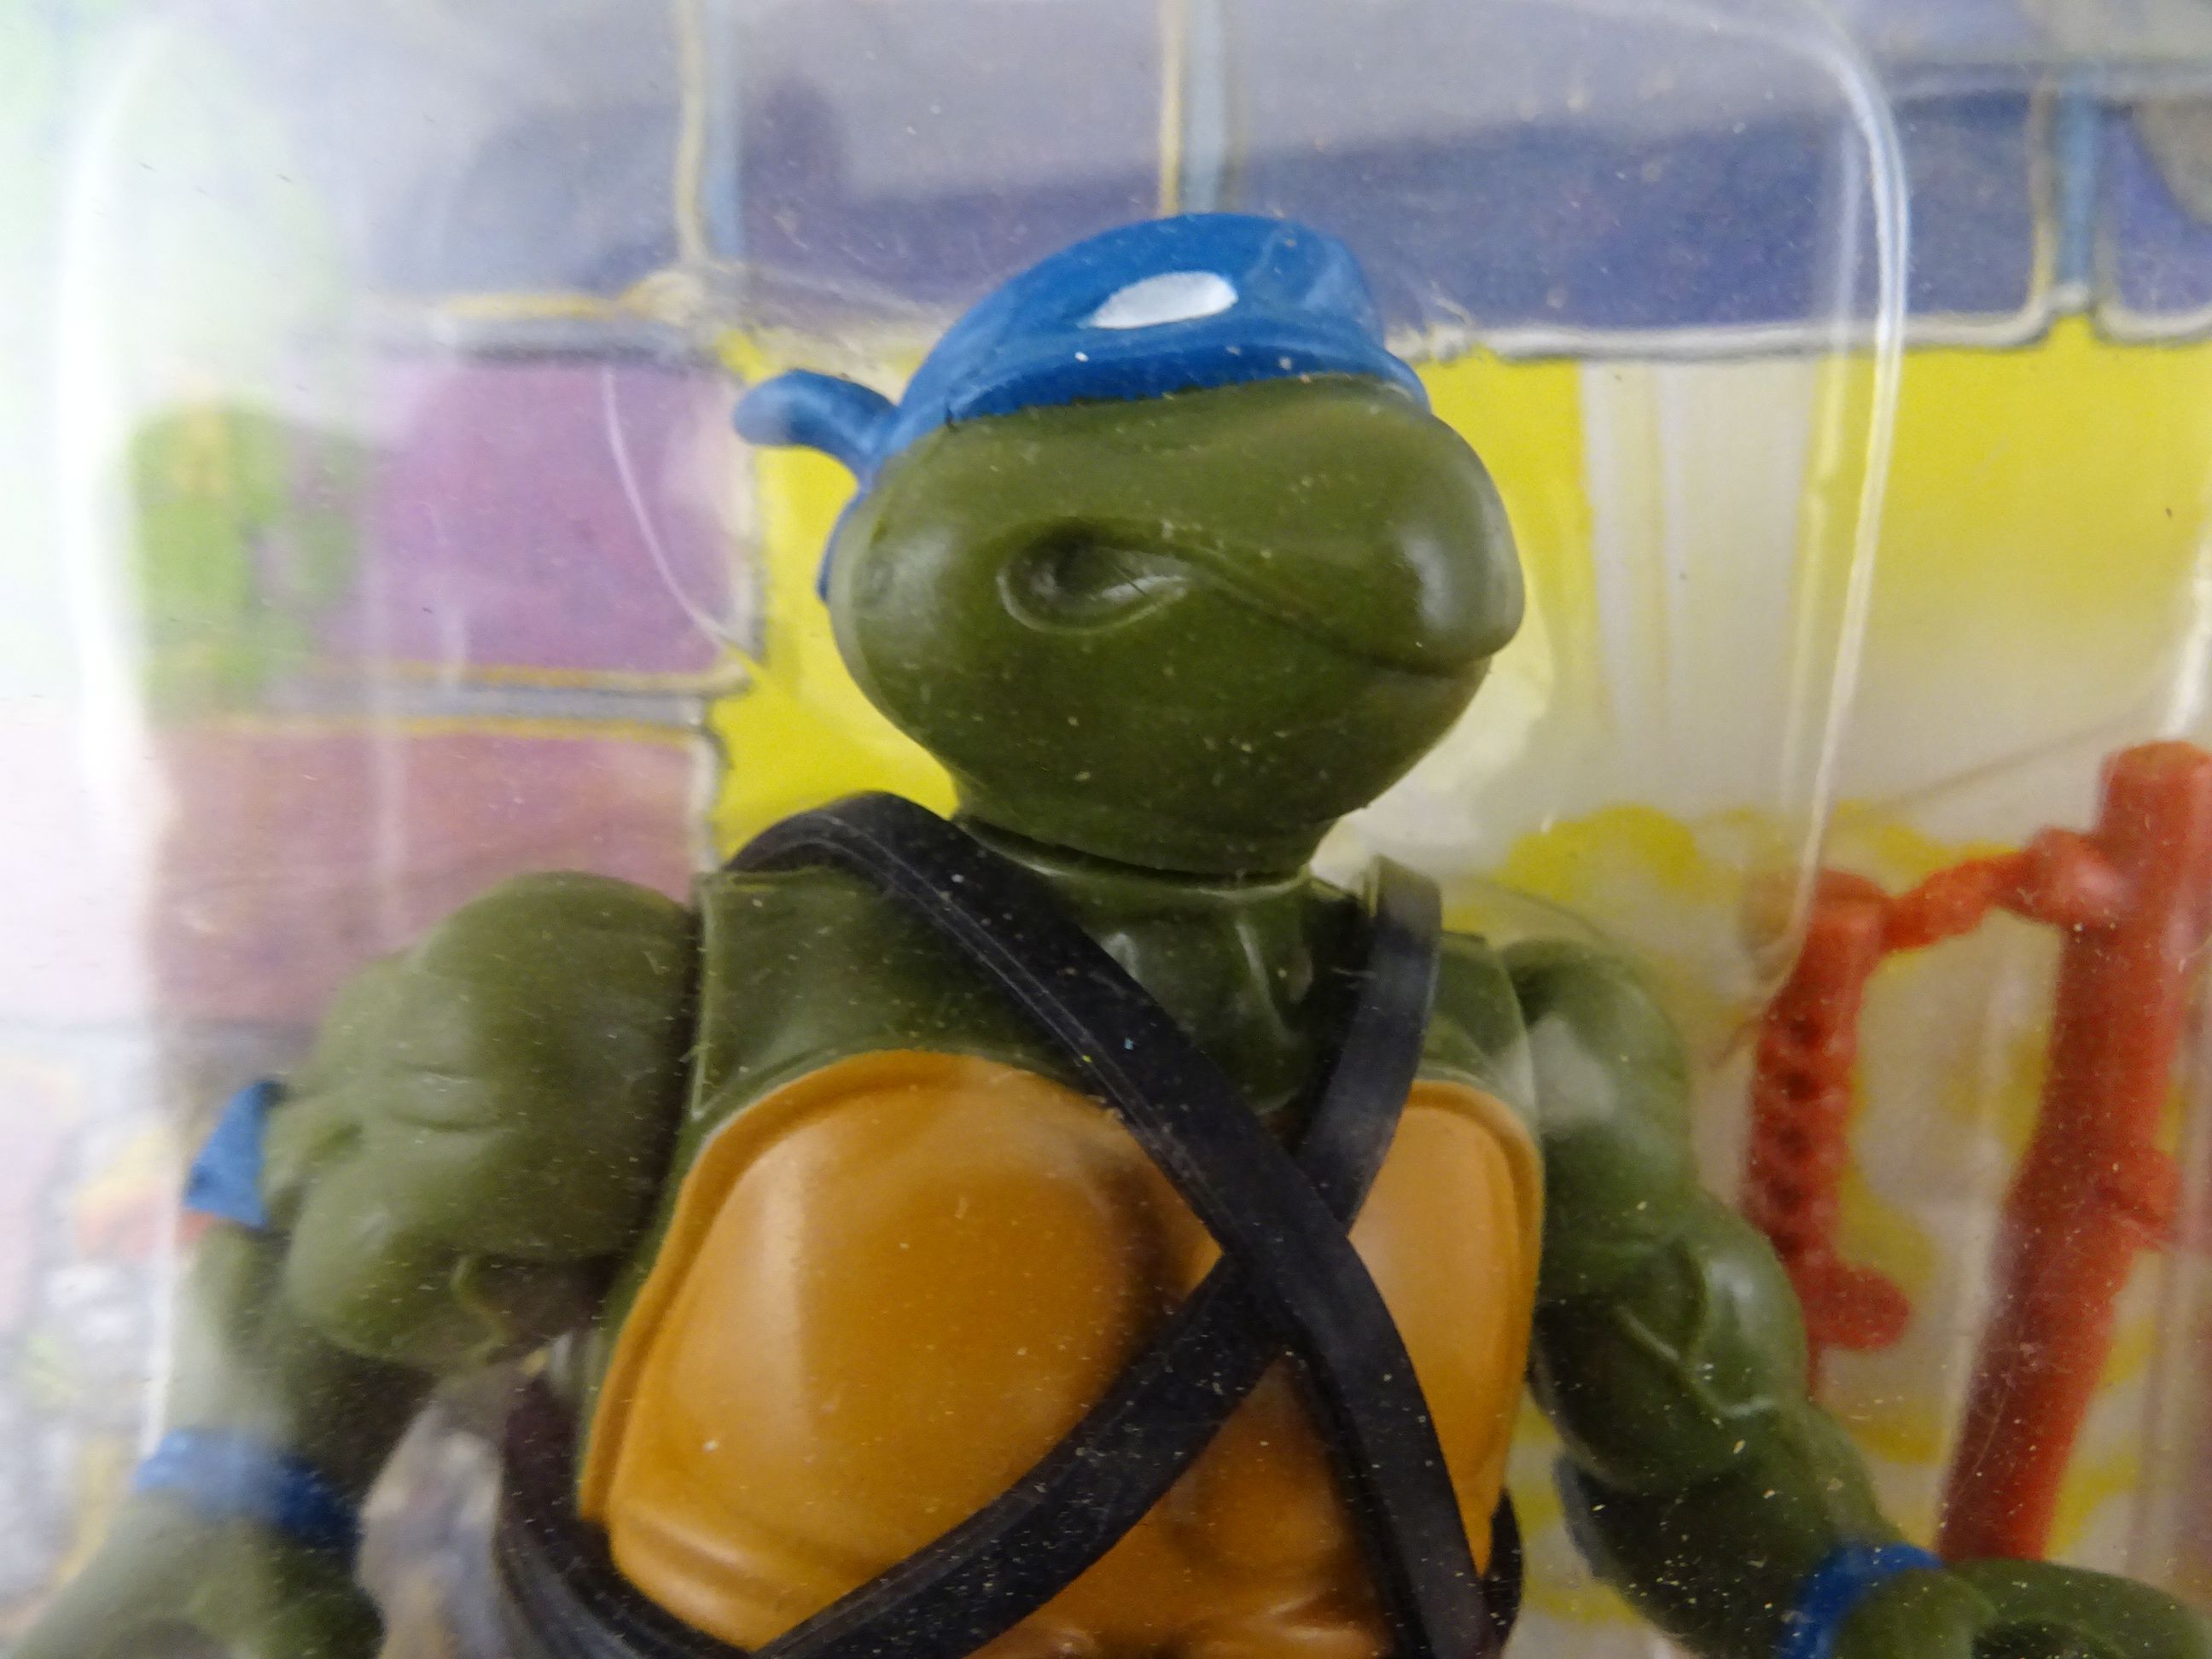 Original carded Playmates Bandai Teenage Mutant Hero Turtles Leonardo figure 20 back, unpunched, - Image 2 of 3